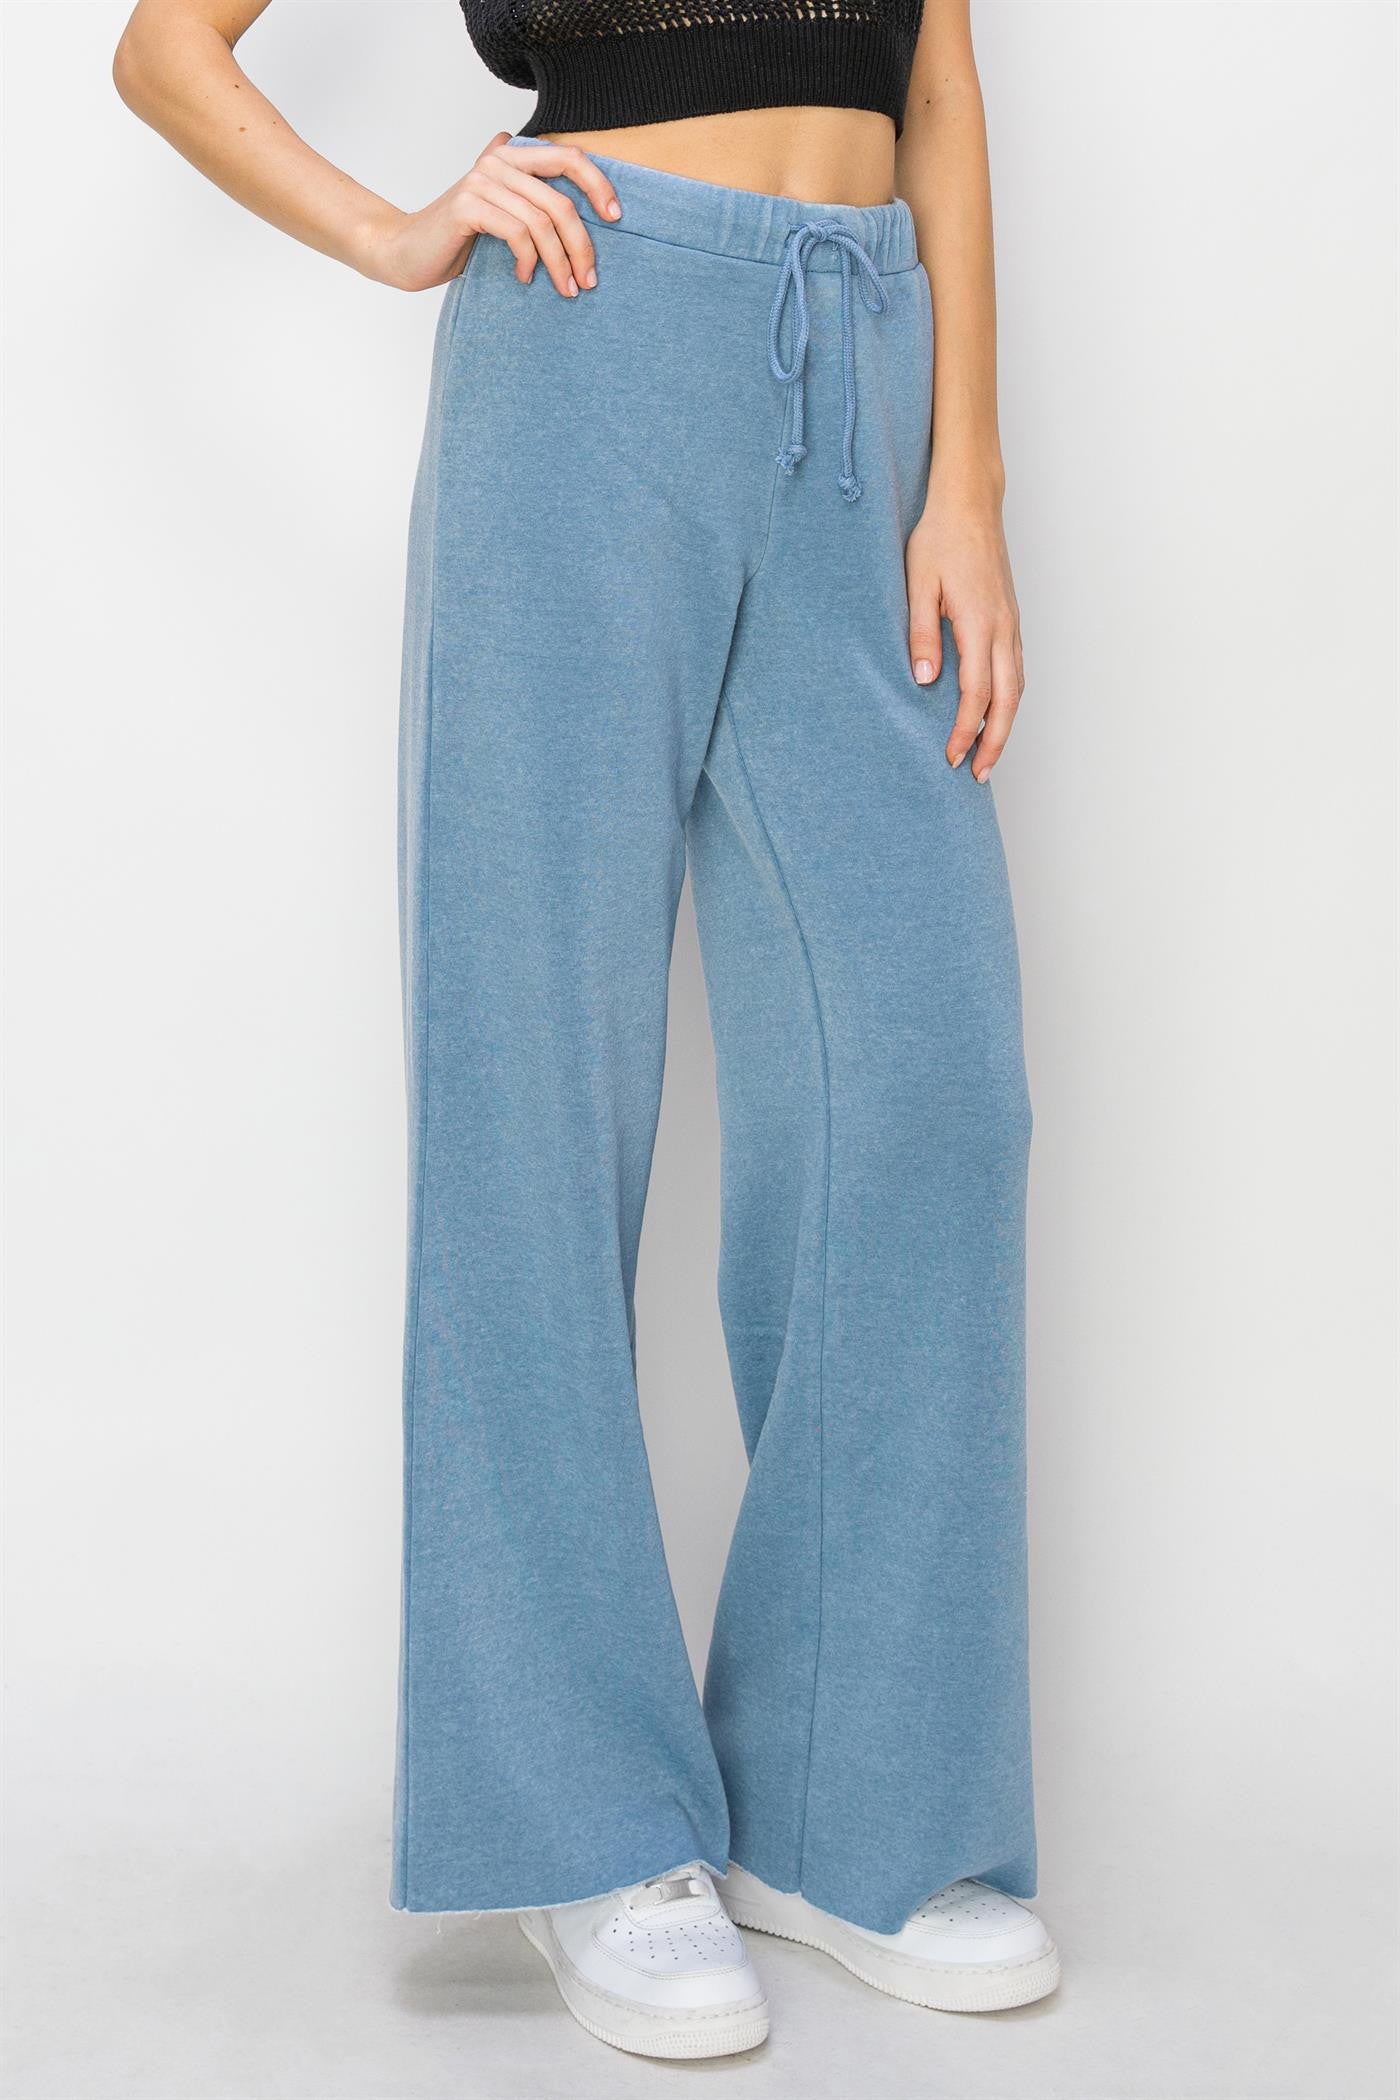 Pants - Flared Drawstring - Grey Blue-hotRAGS.com